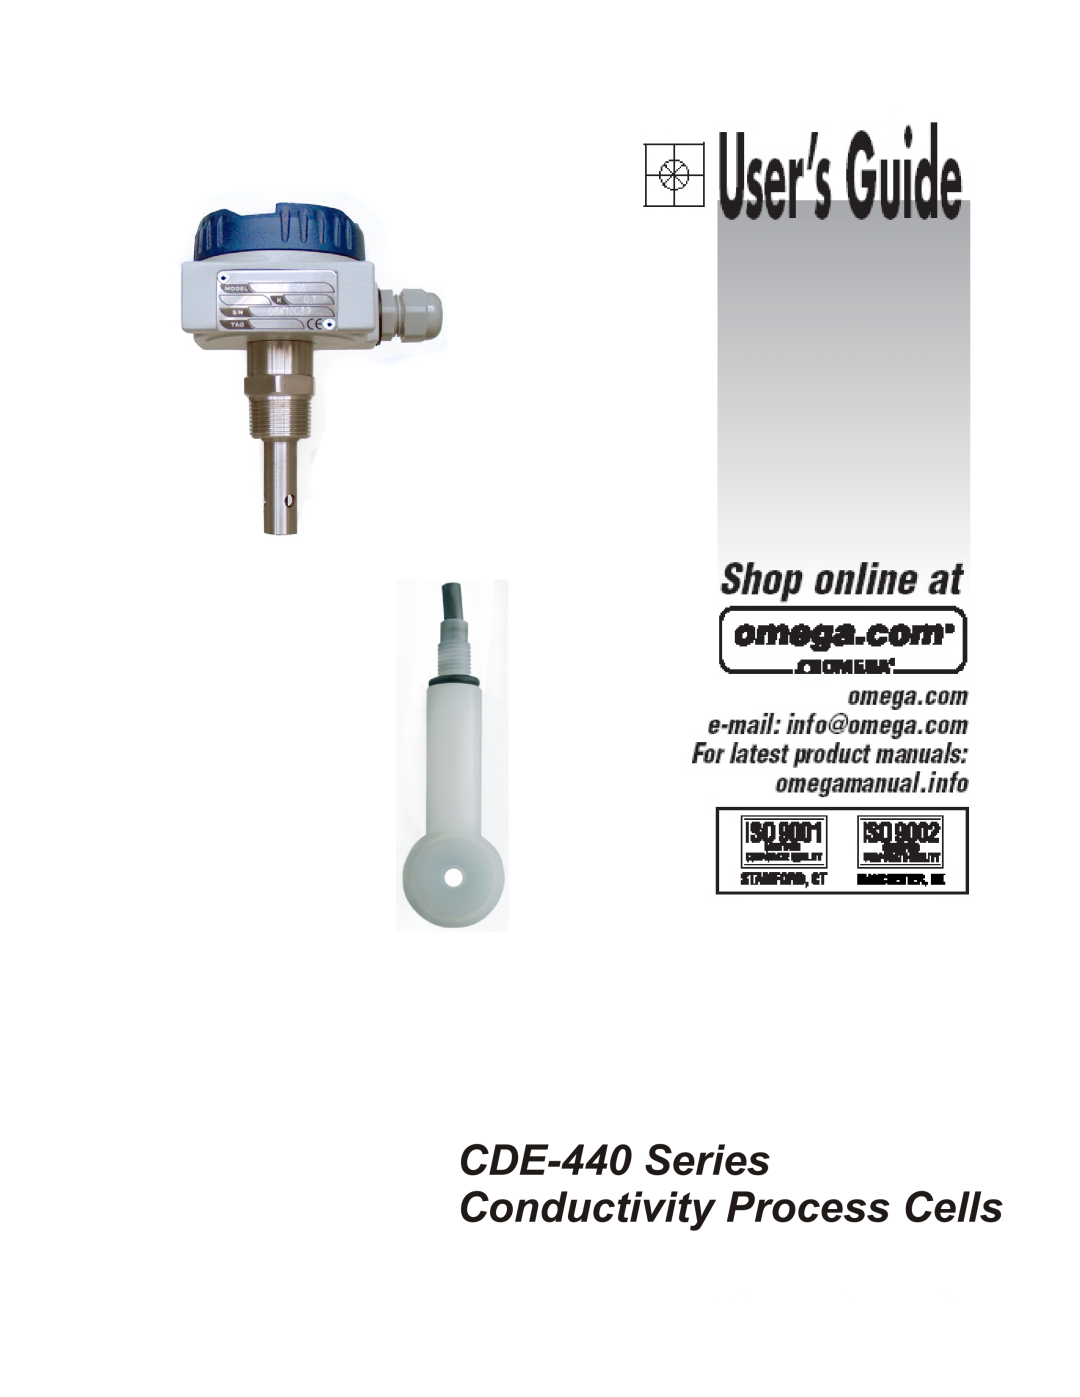 Omega manual CDE-440 Series, Conductivity Process Cells 